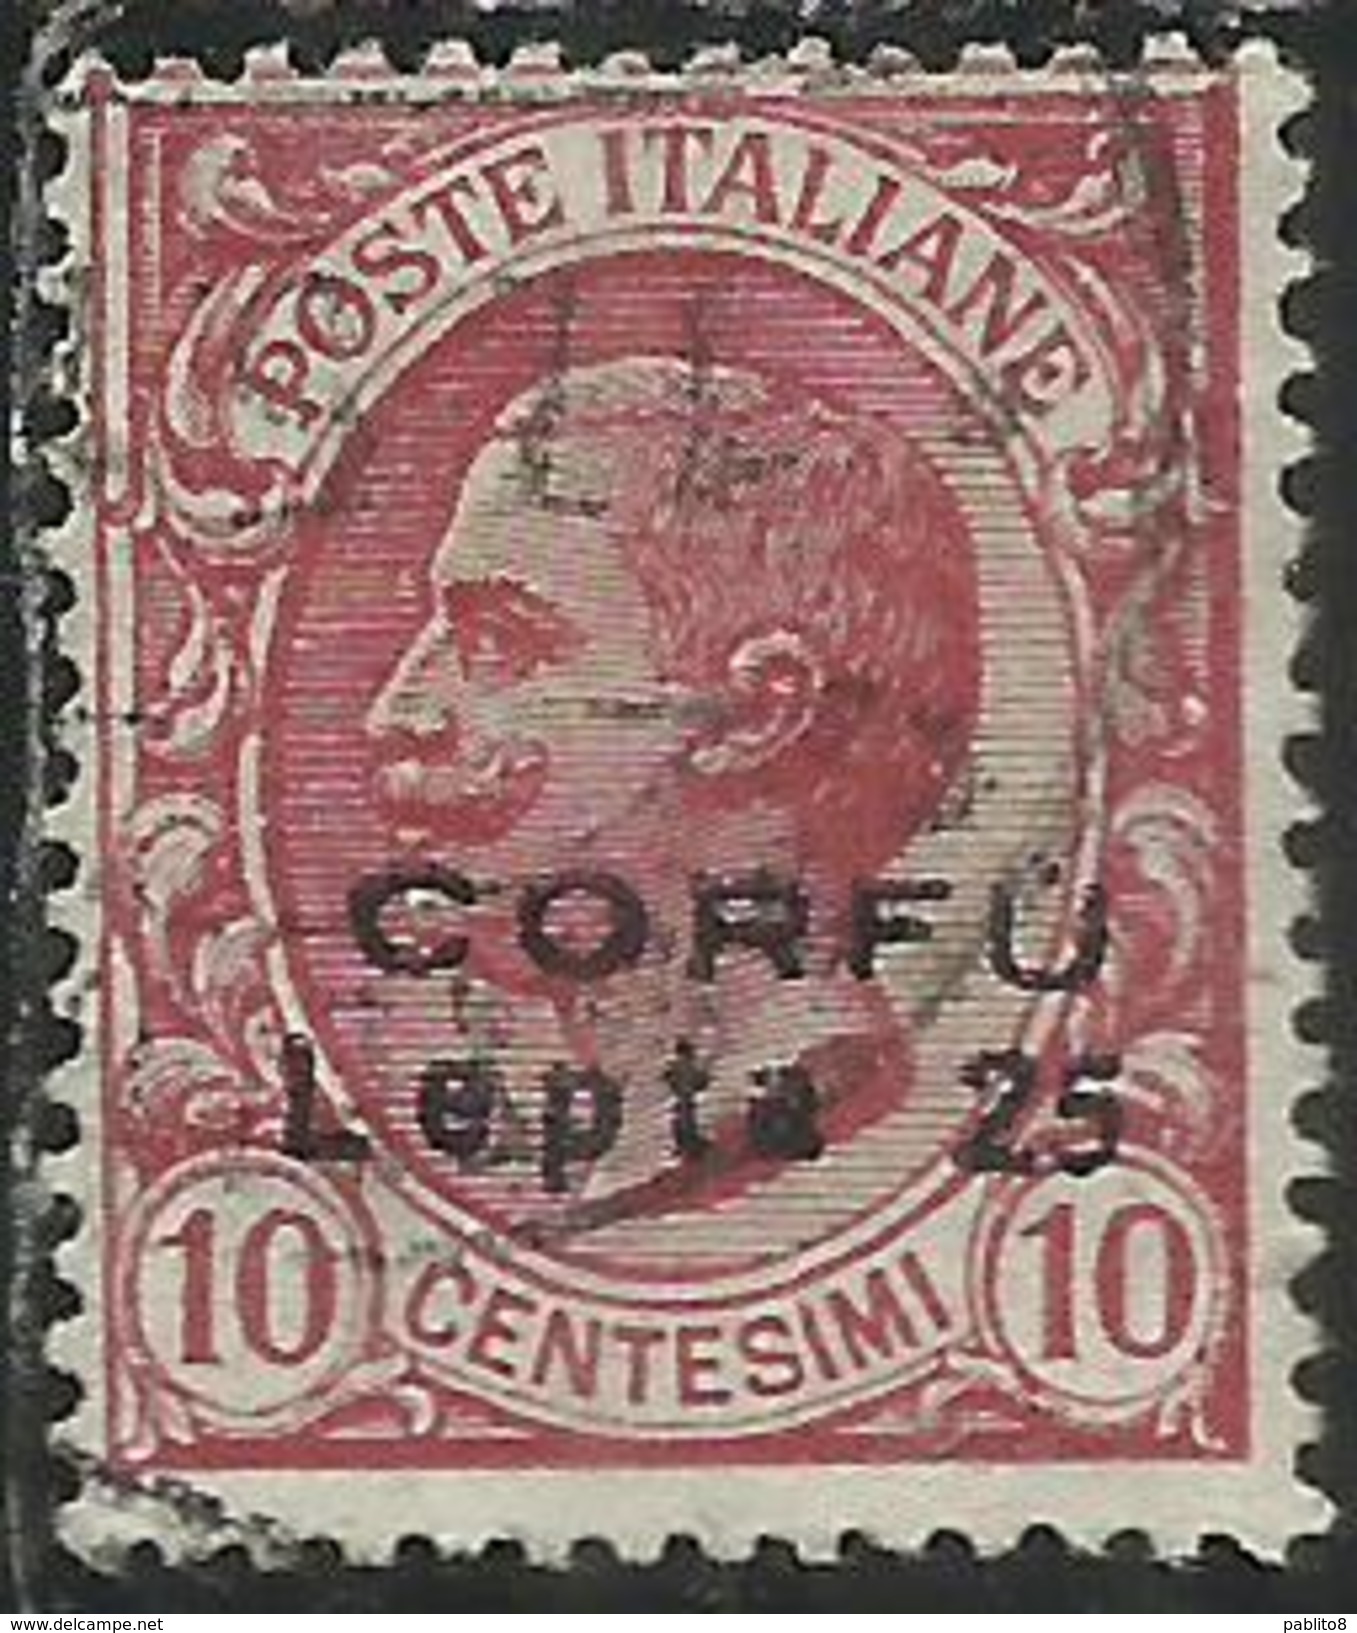 CORFU´ 1923 SOPRASTAMPATO D´ITALIA ITALY OVERPRINTED SURCHARGE 25 LEPTA SU 10 CENT. USED - Corfu